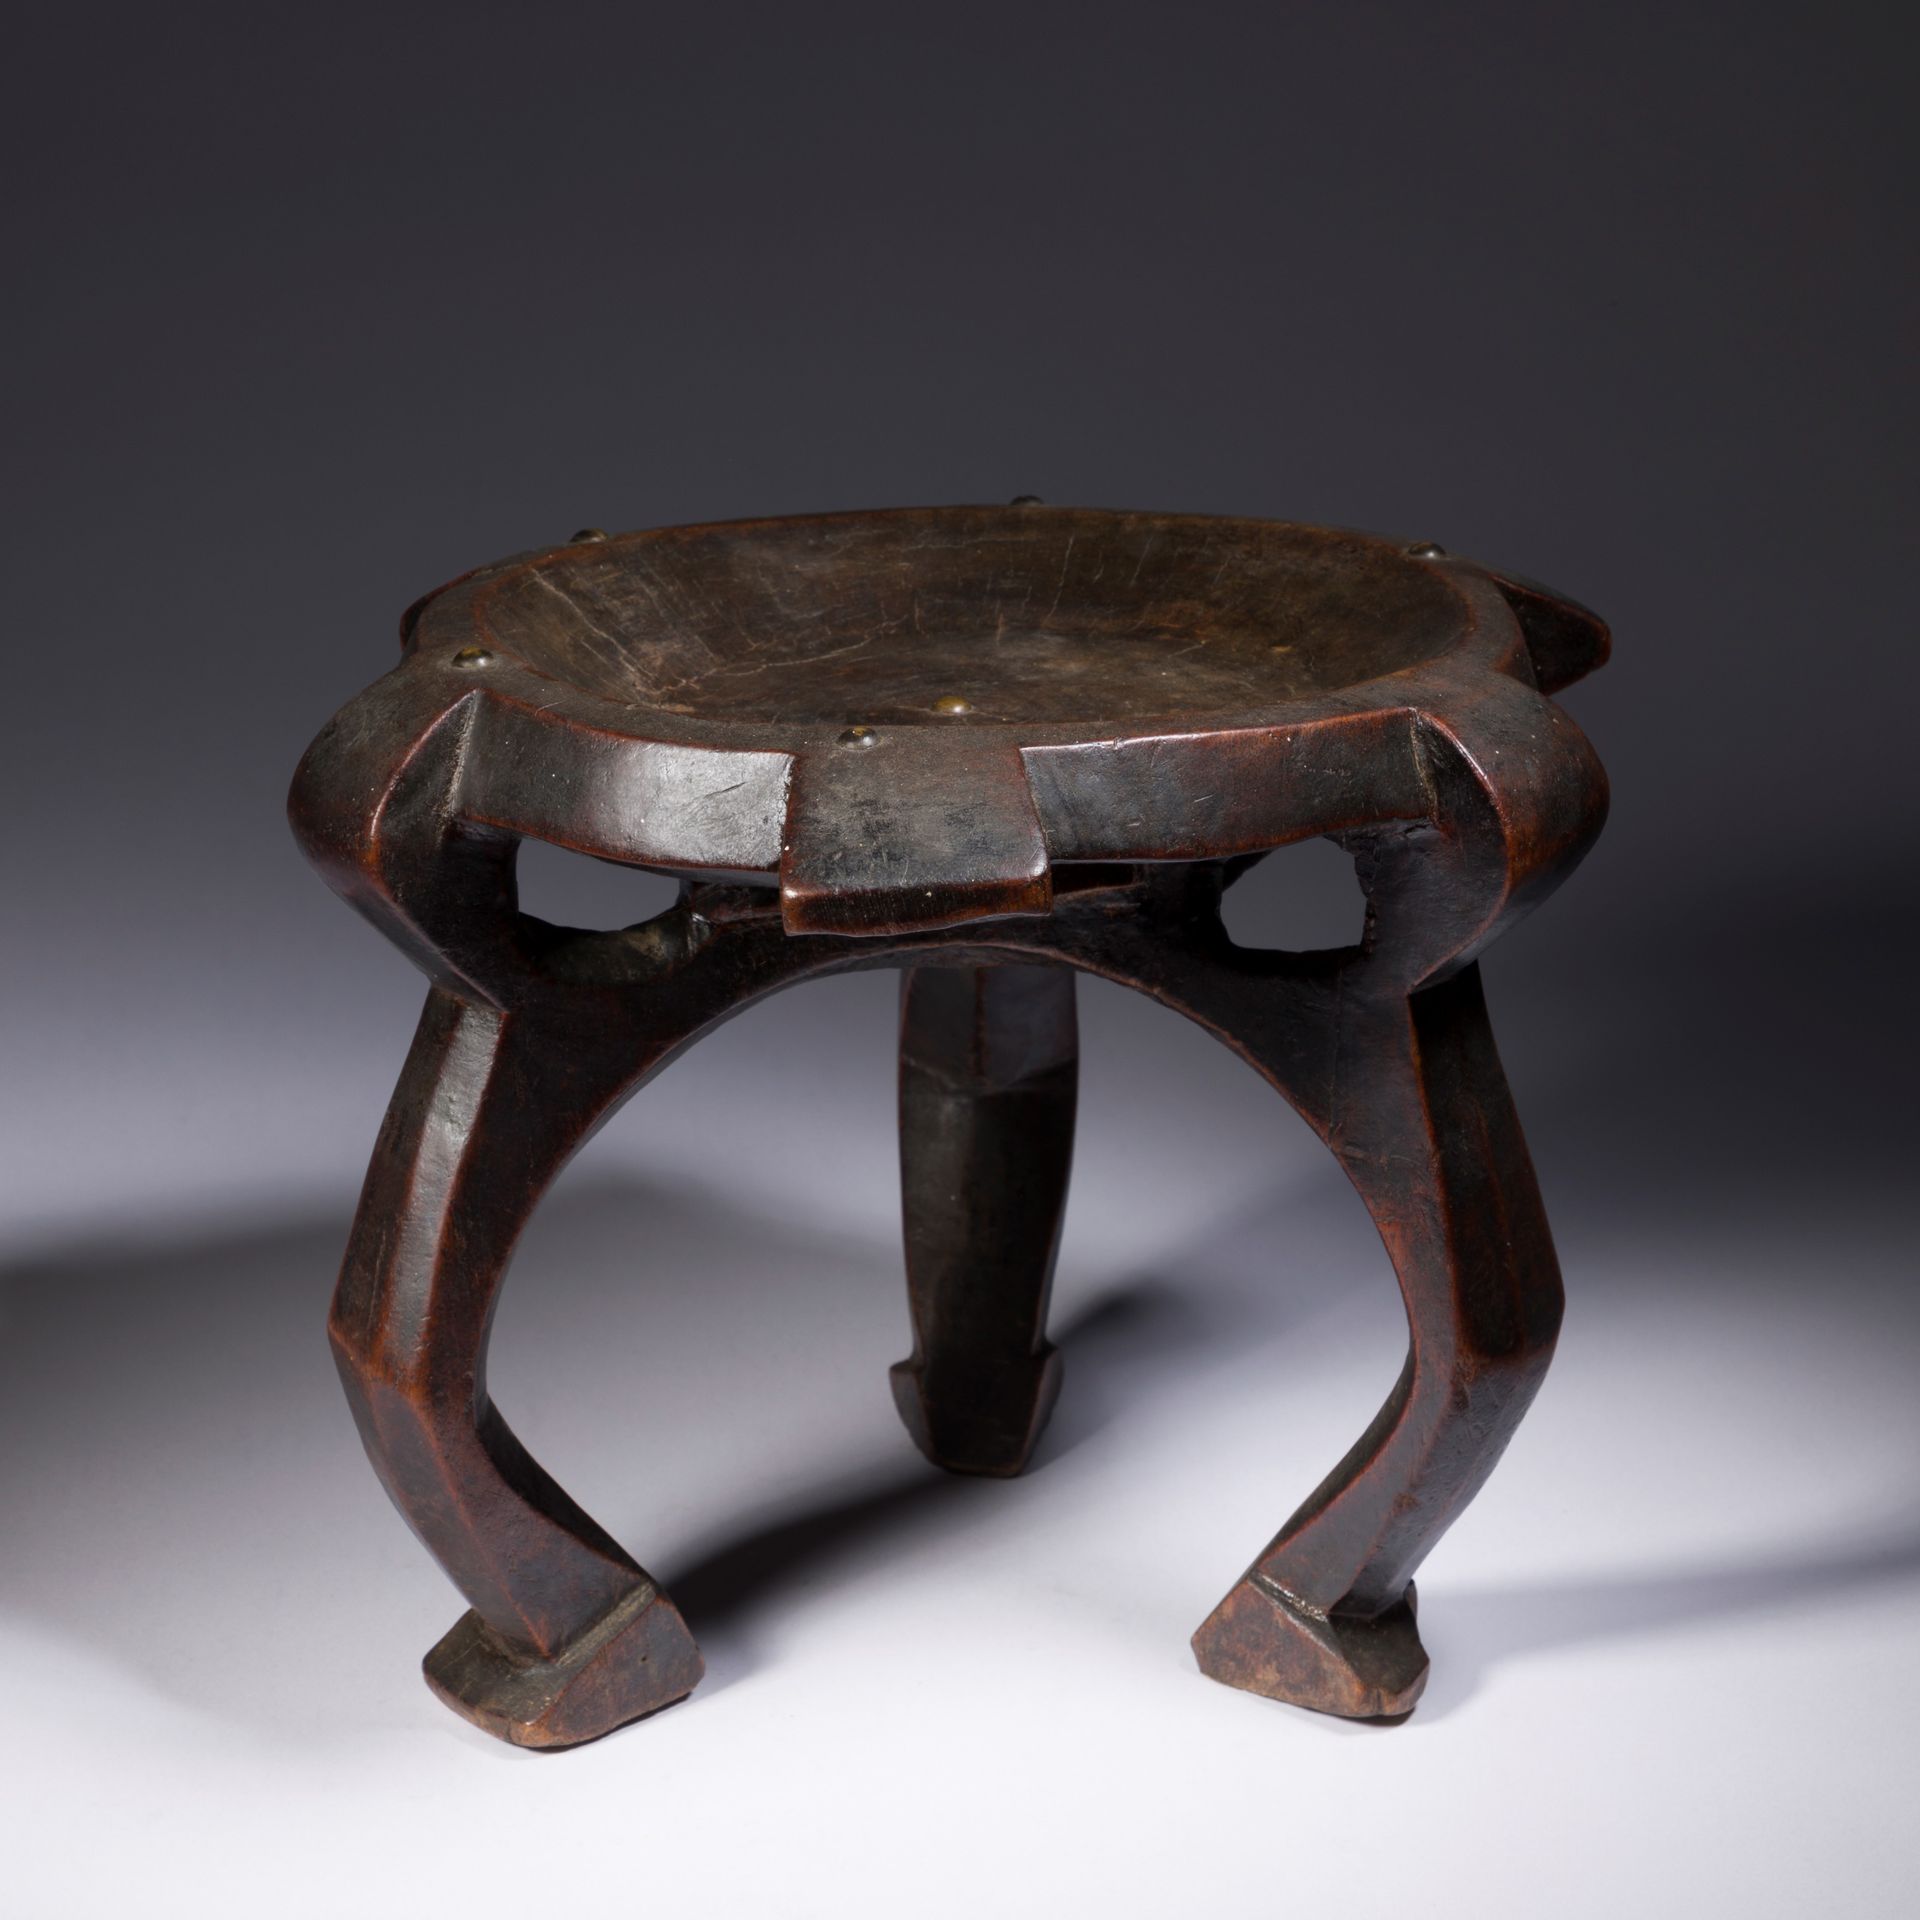 Null *一个古老而又非常漂亮的小三角凳，上面装饰着装潢师的钉子，它的三条弯曲的腿都以脚结束，使它具有超现实的活力和存在感。

赫赫或坦桑尼亚扎拉莫

木质，&hellip;